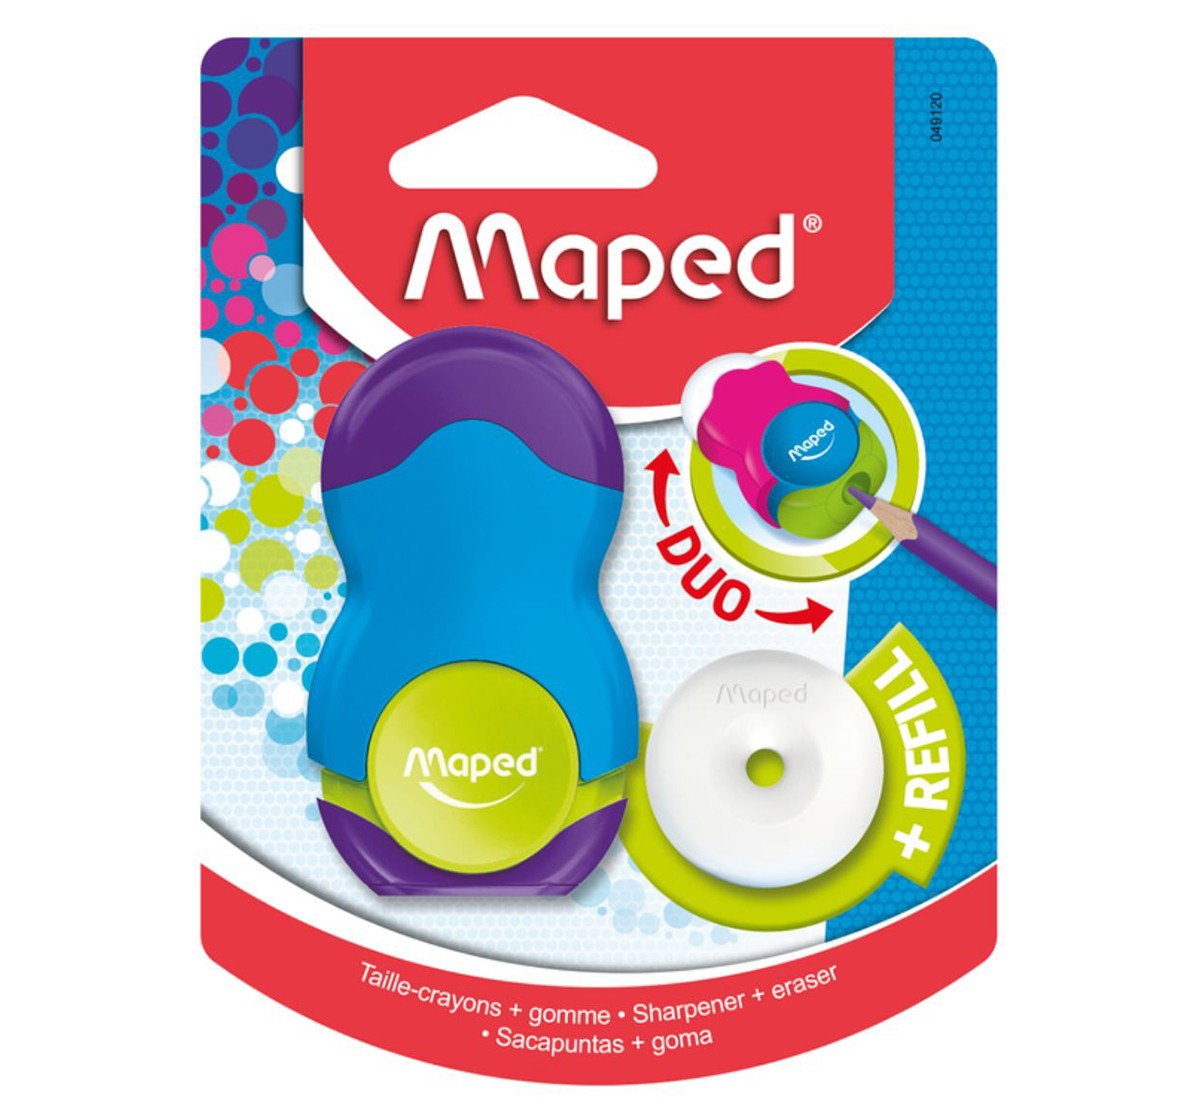 Maped Loopy 1 Hole Lead Sharpener, 7Y+ (Multicolour)